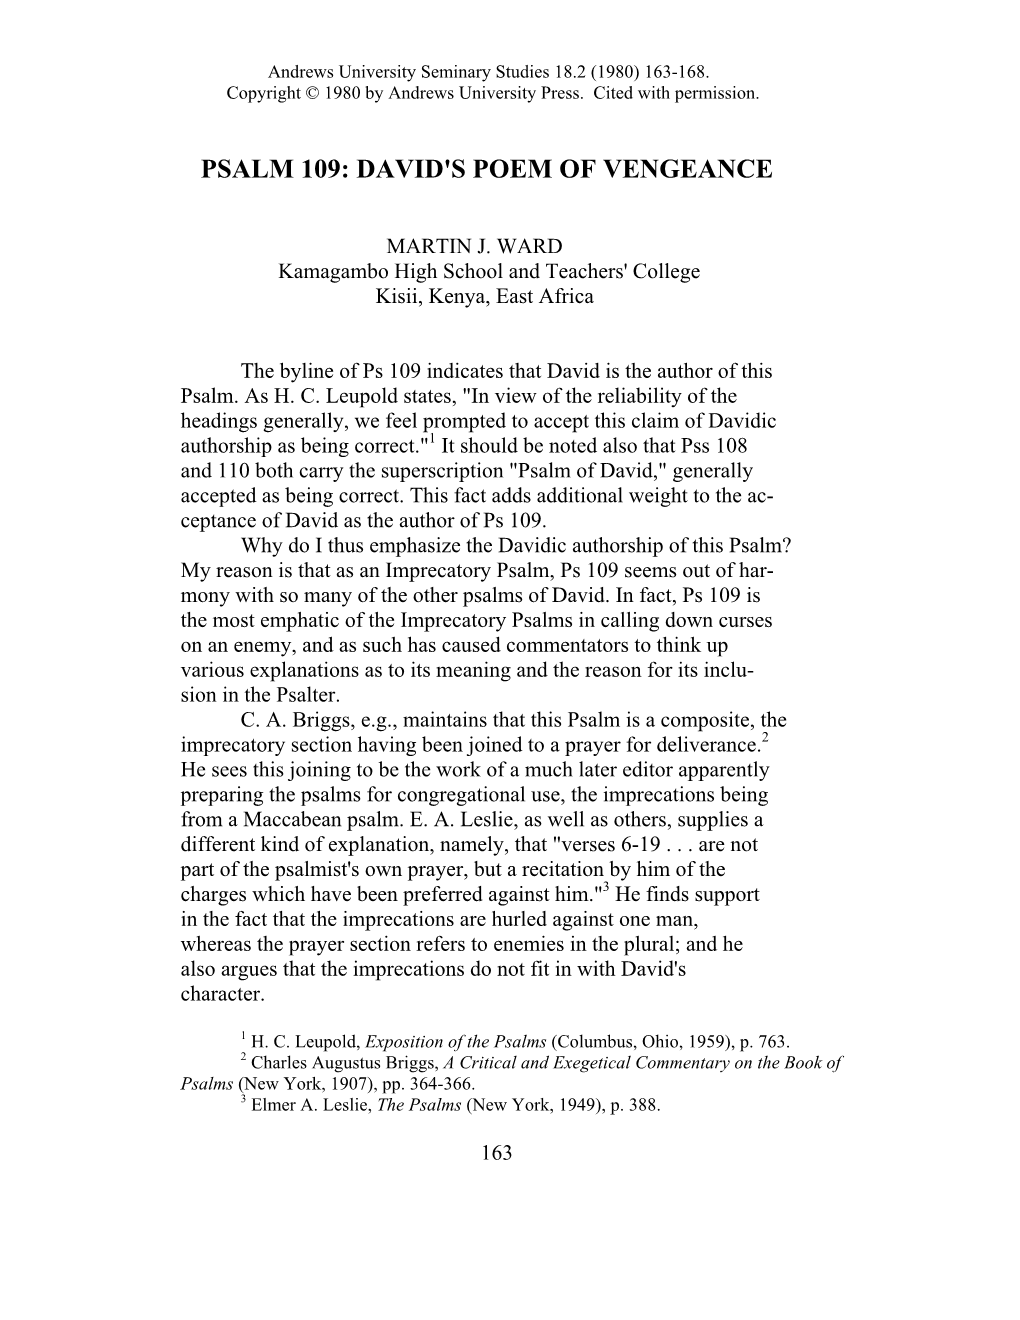 Psalm 109: David's Poem of Vengeance